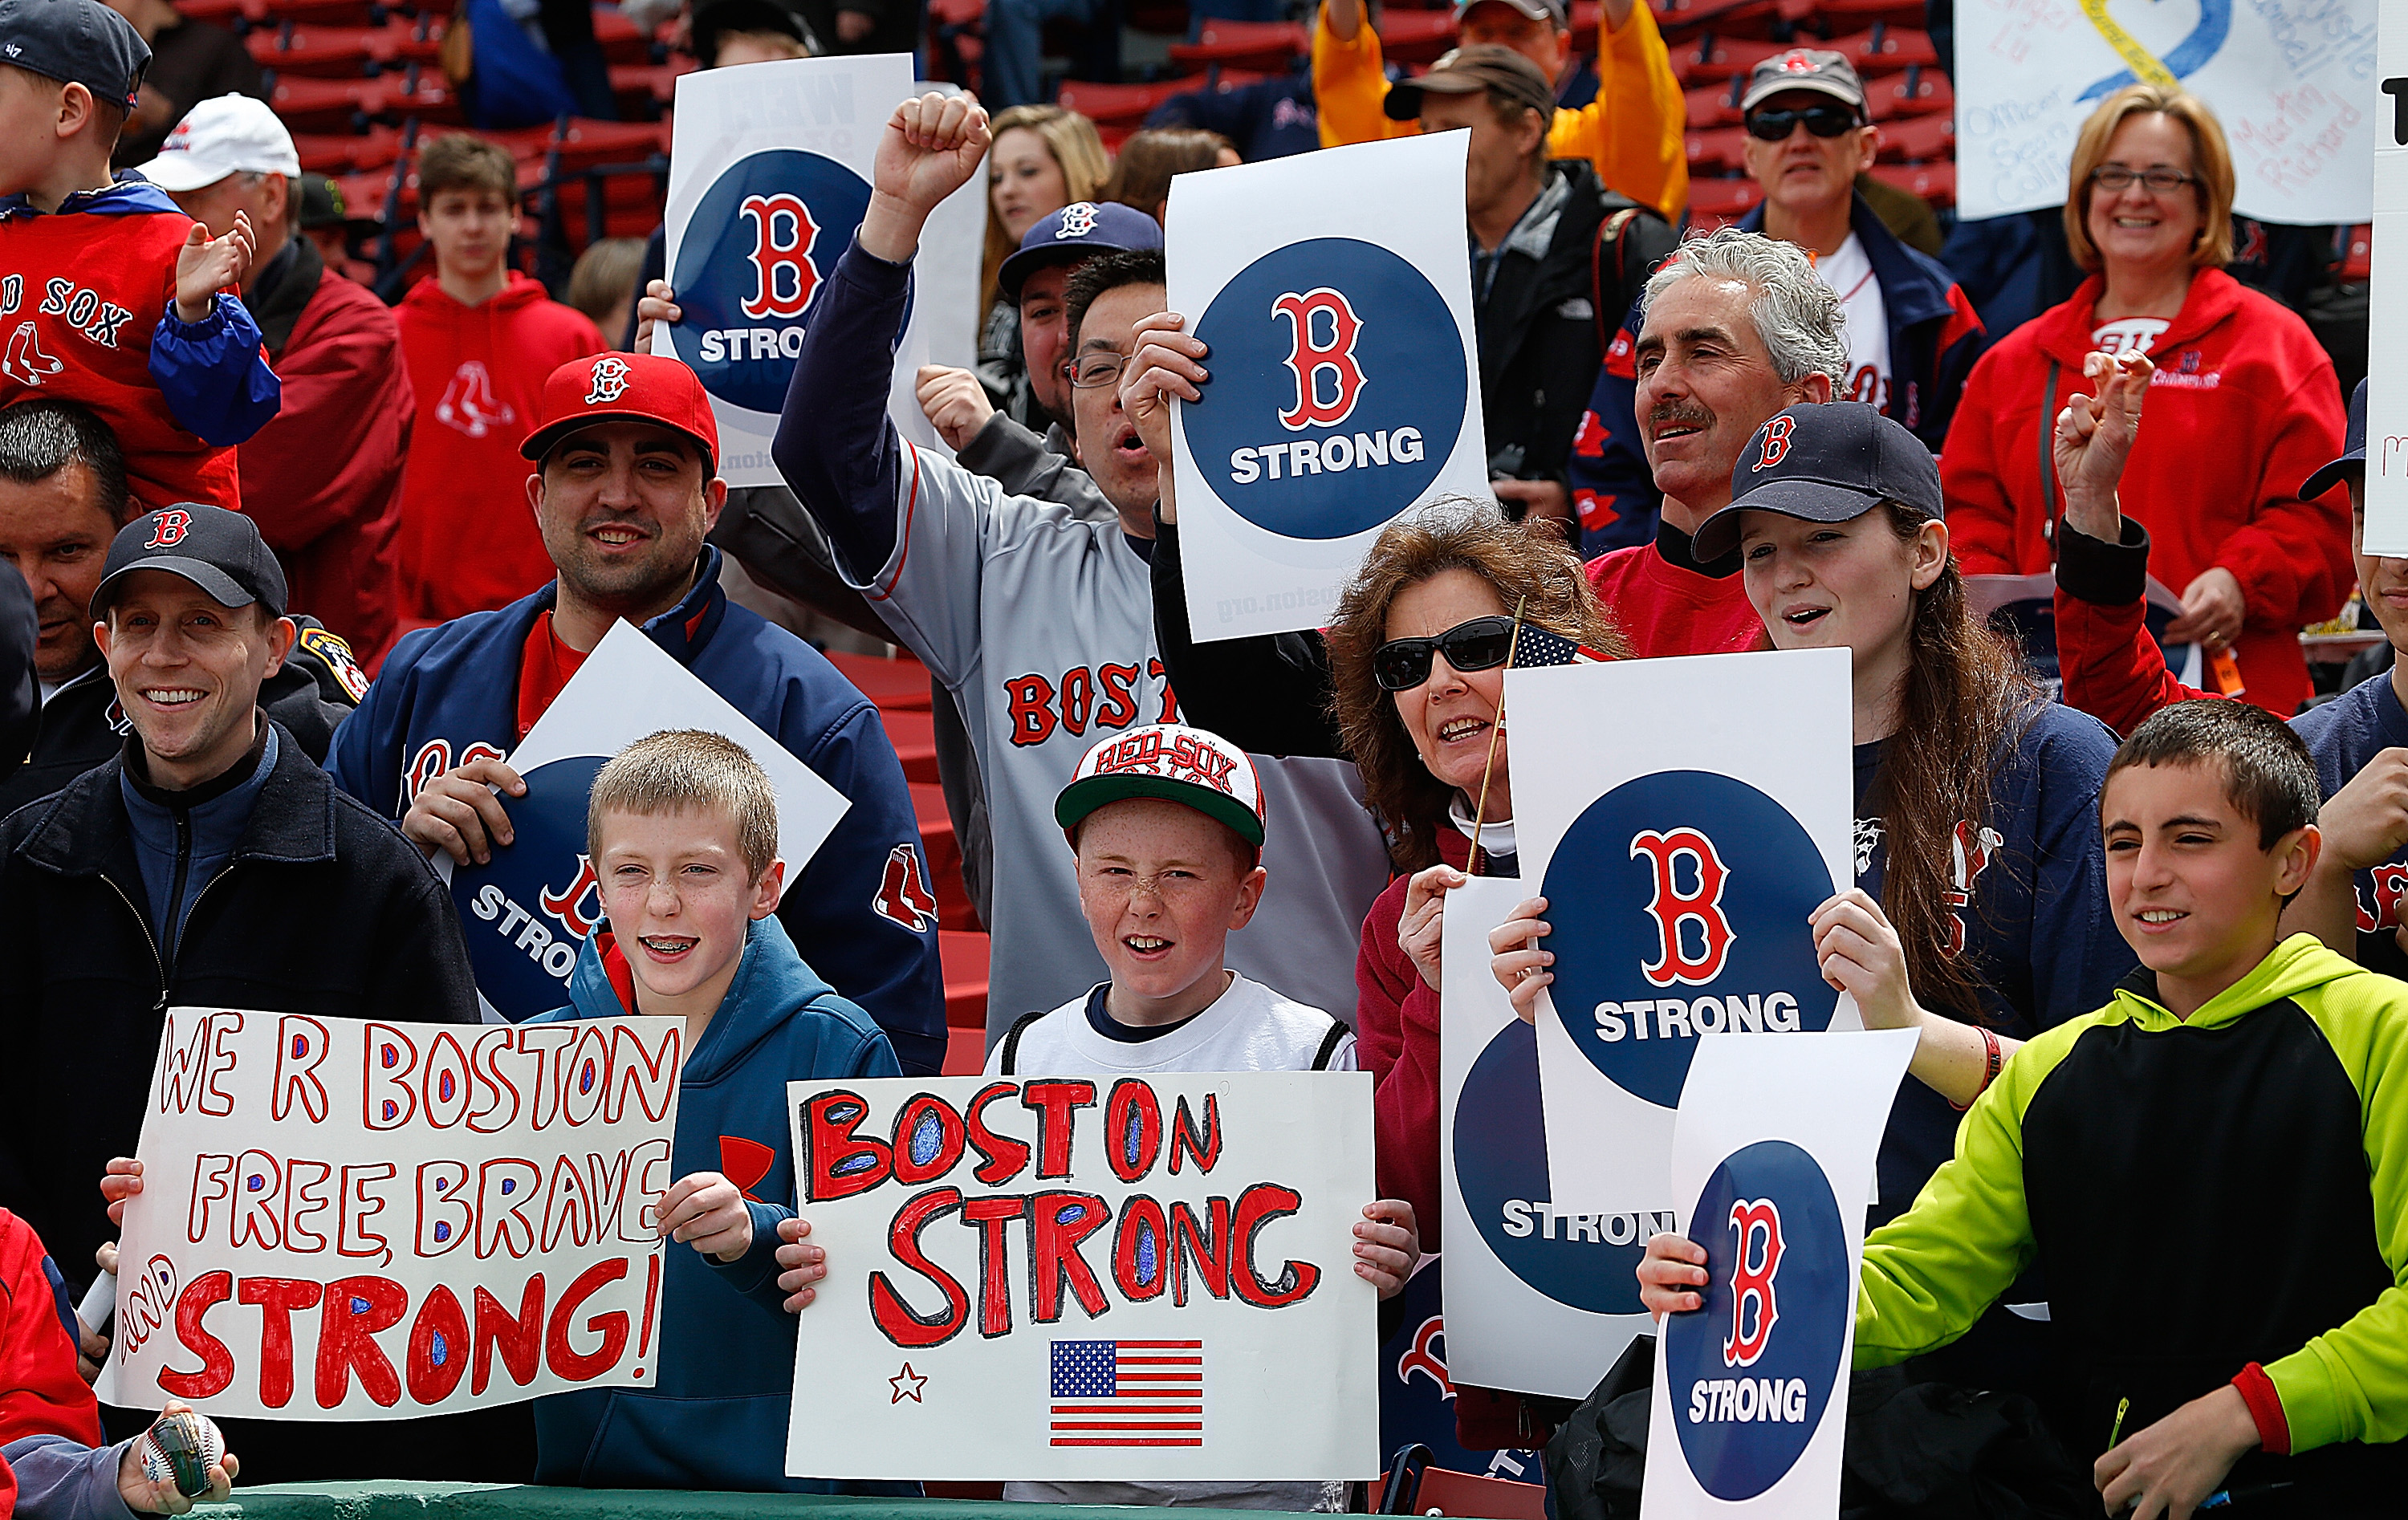 Former Red Sox stars shine at Boston Marathon